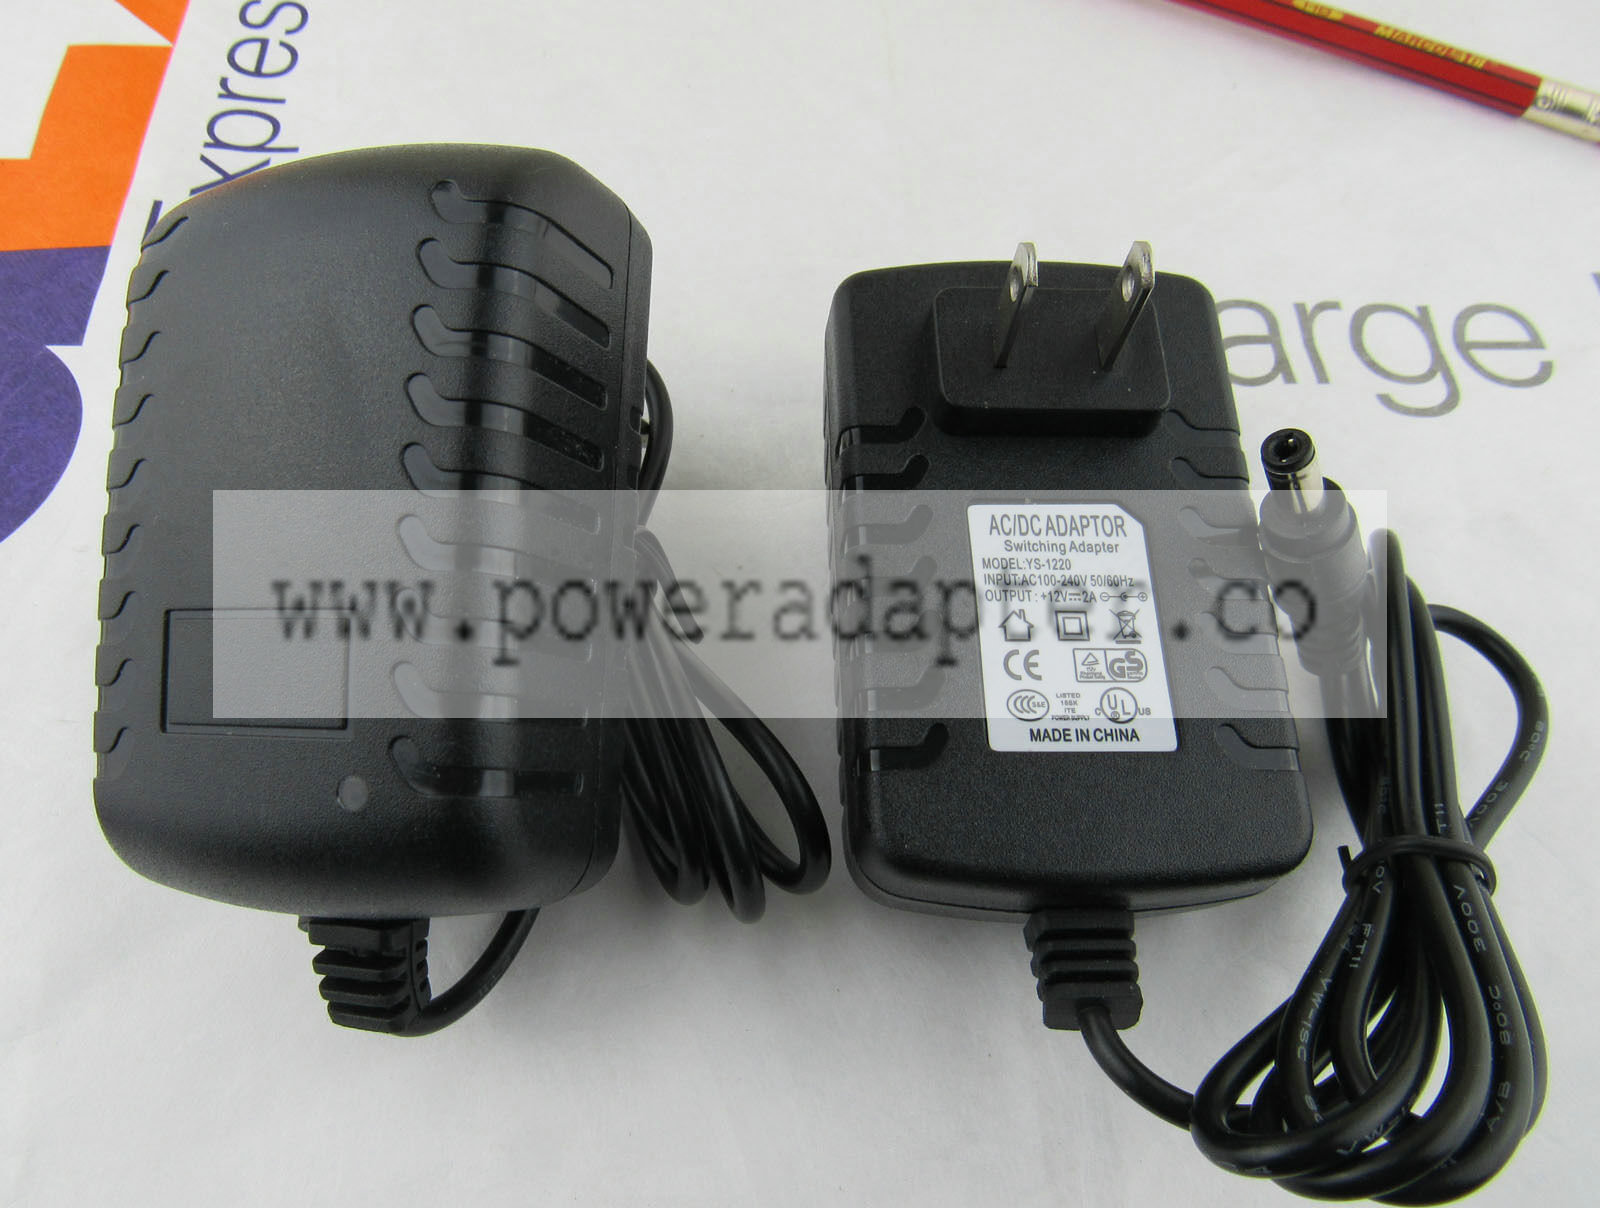 AC Adapter for Motorola 12V 2A SB5101 SB5100 SB6120 Cable Modem Power Supply Type: 12V 2A Brand: Jujint MPN: 12V2A - Click Image to Close